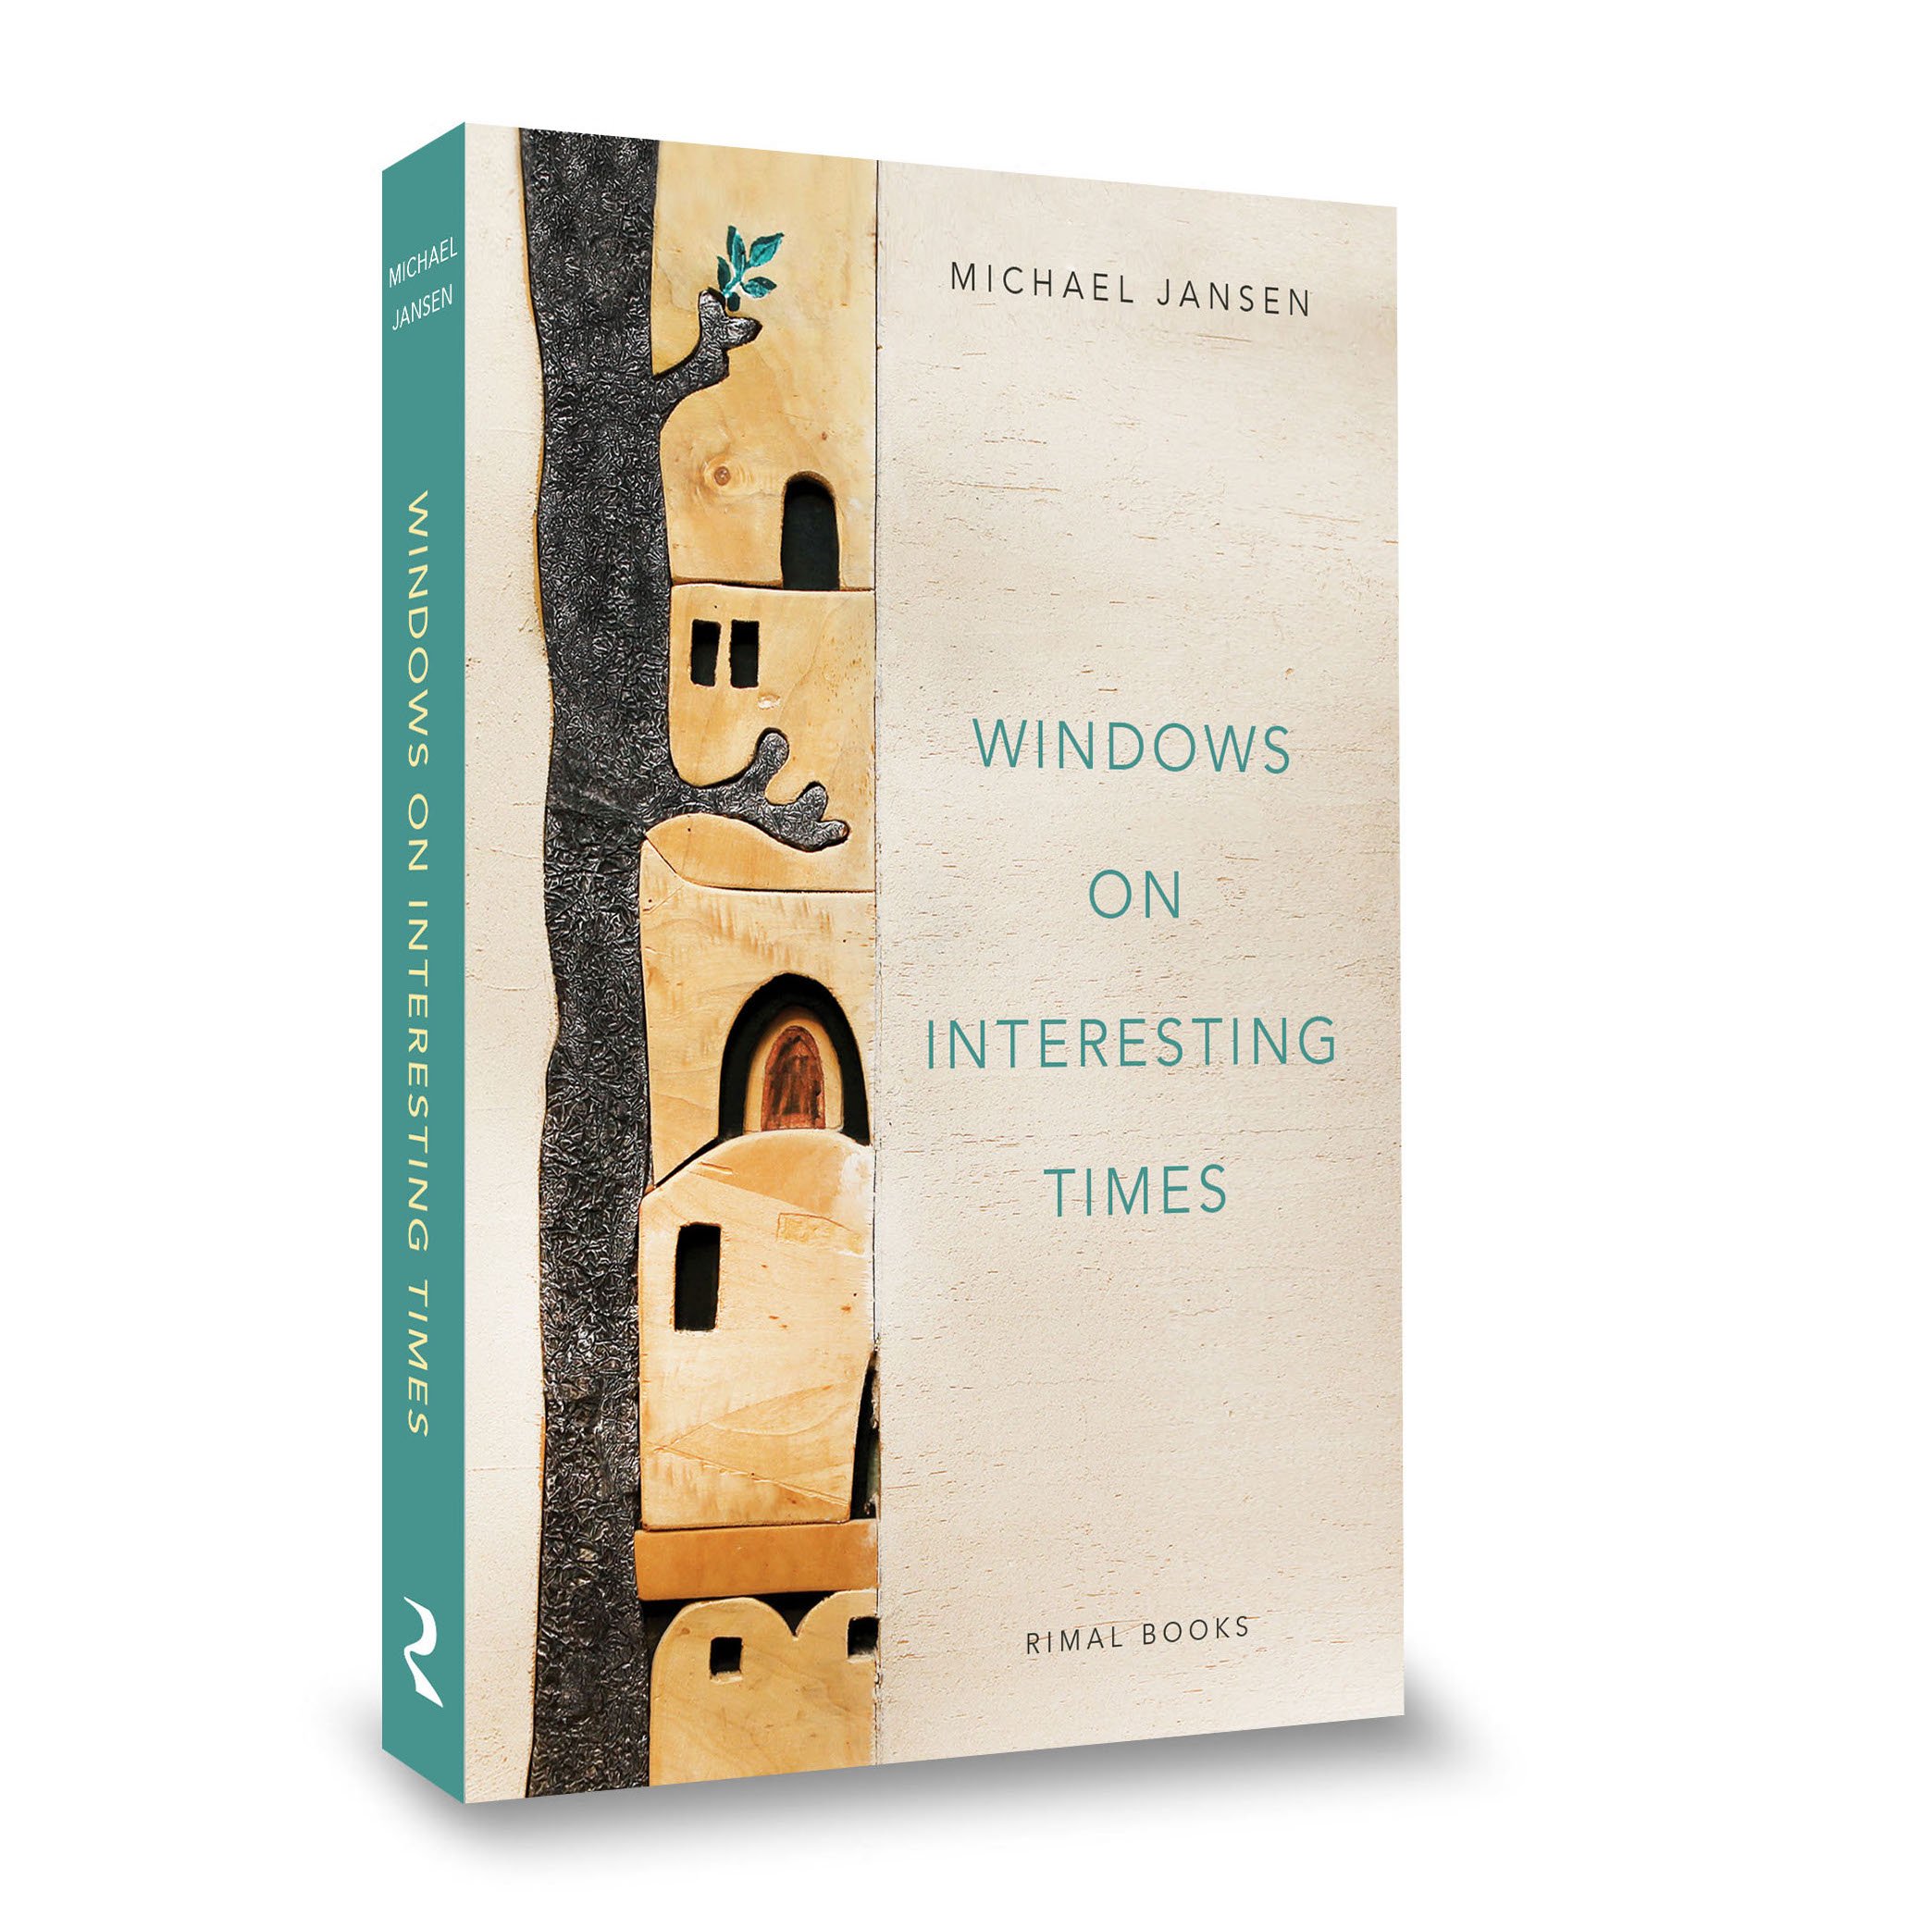 WINDOWS ON INTERESTING TIMES